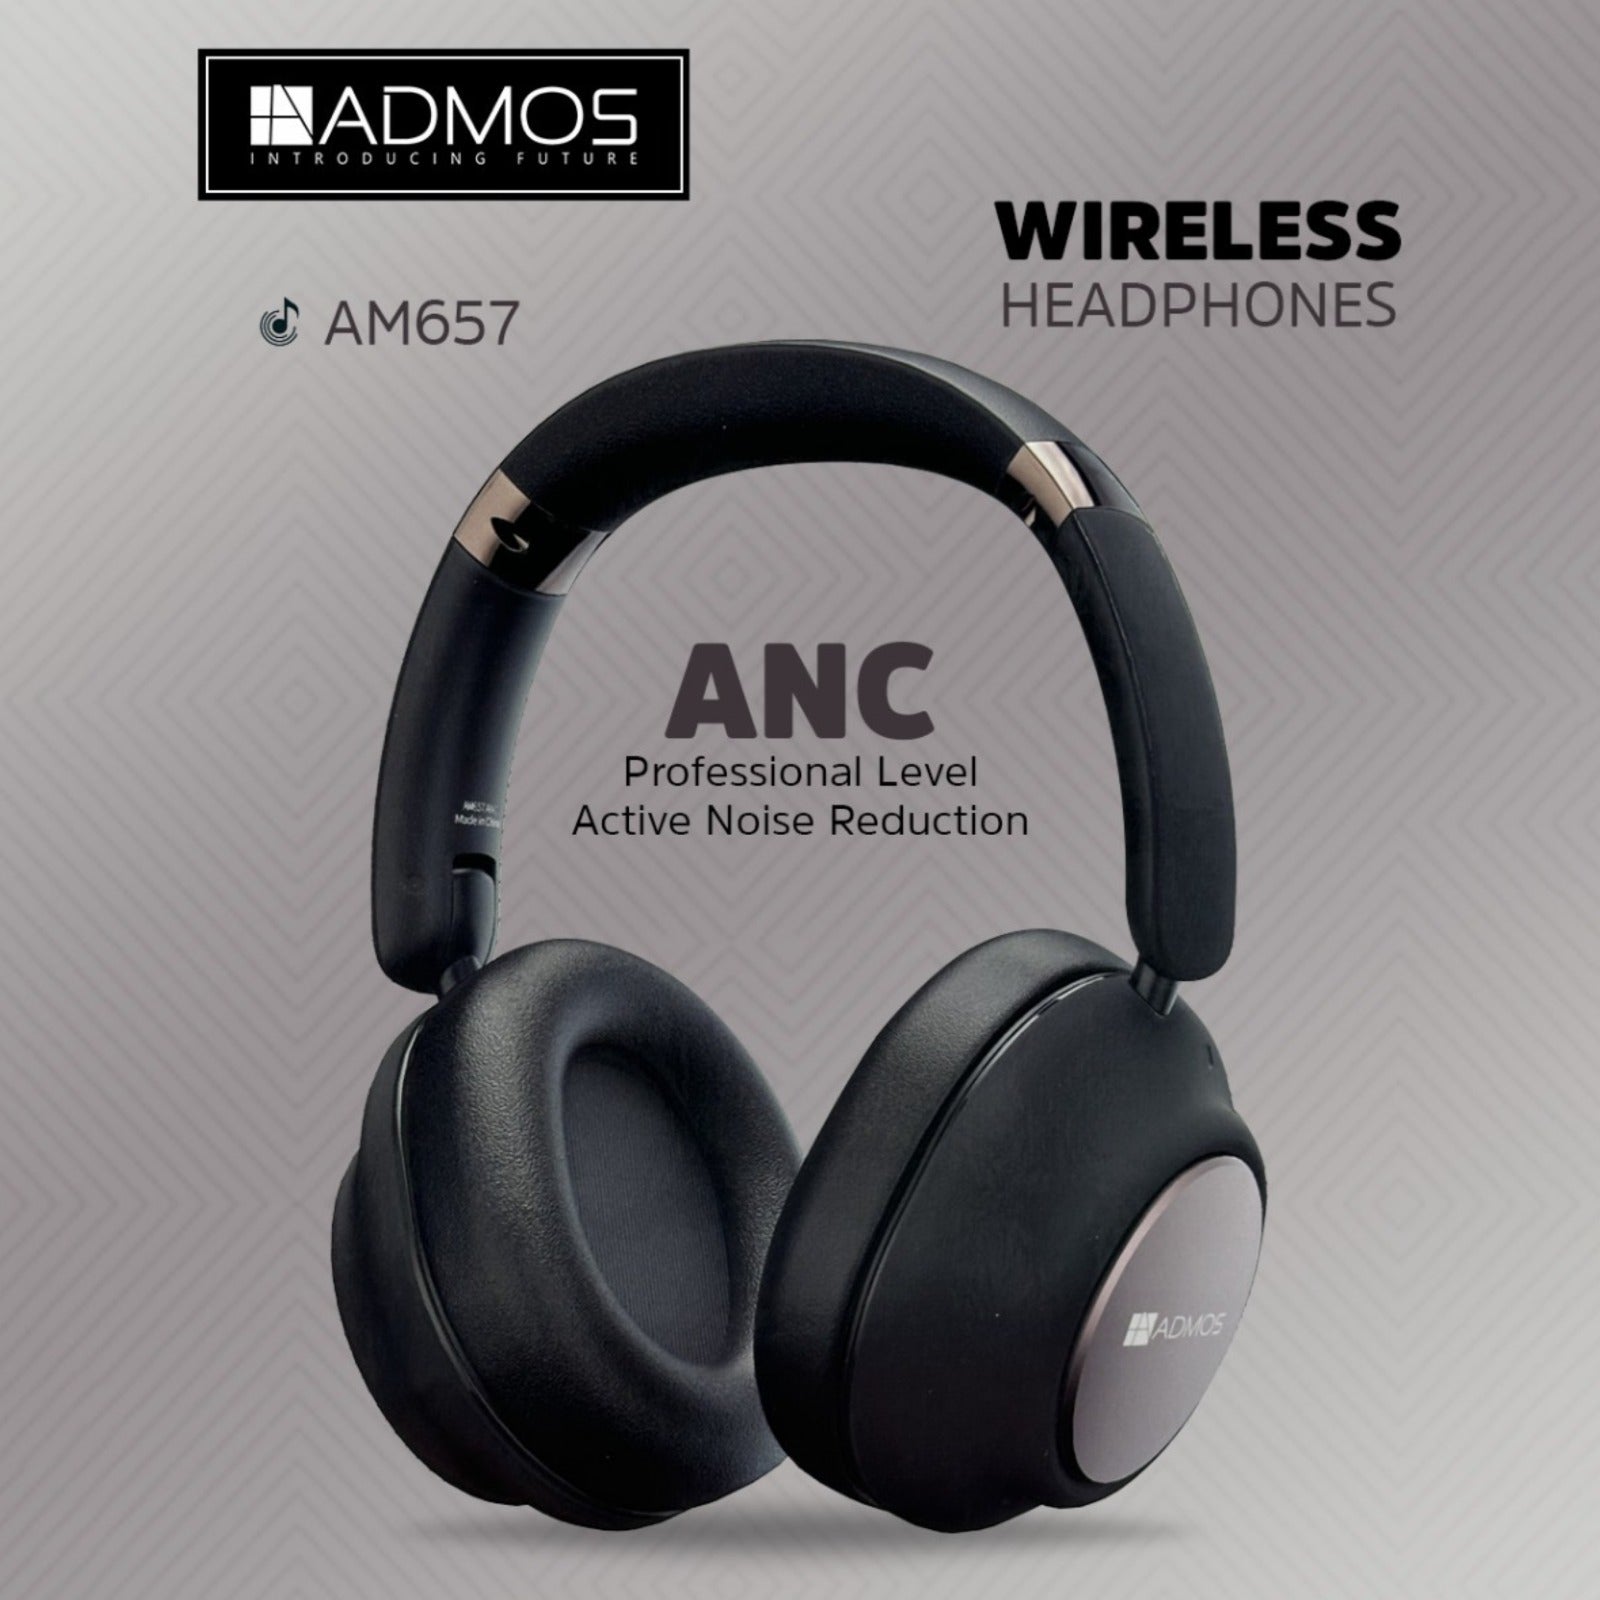 ADMOS ANC Wireless Headphone.